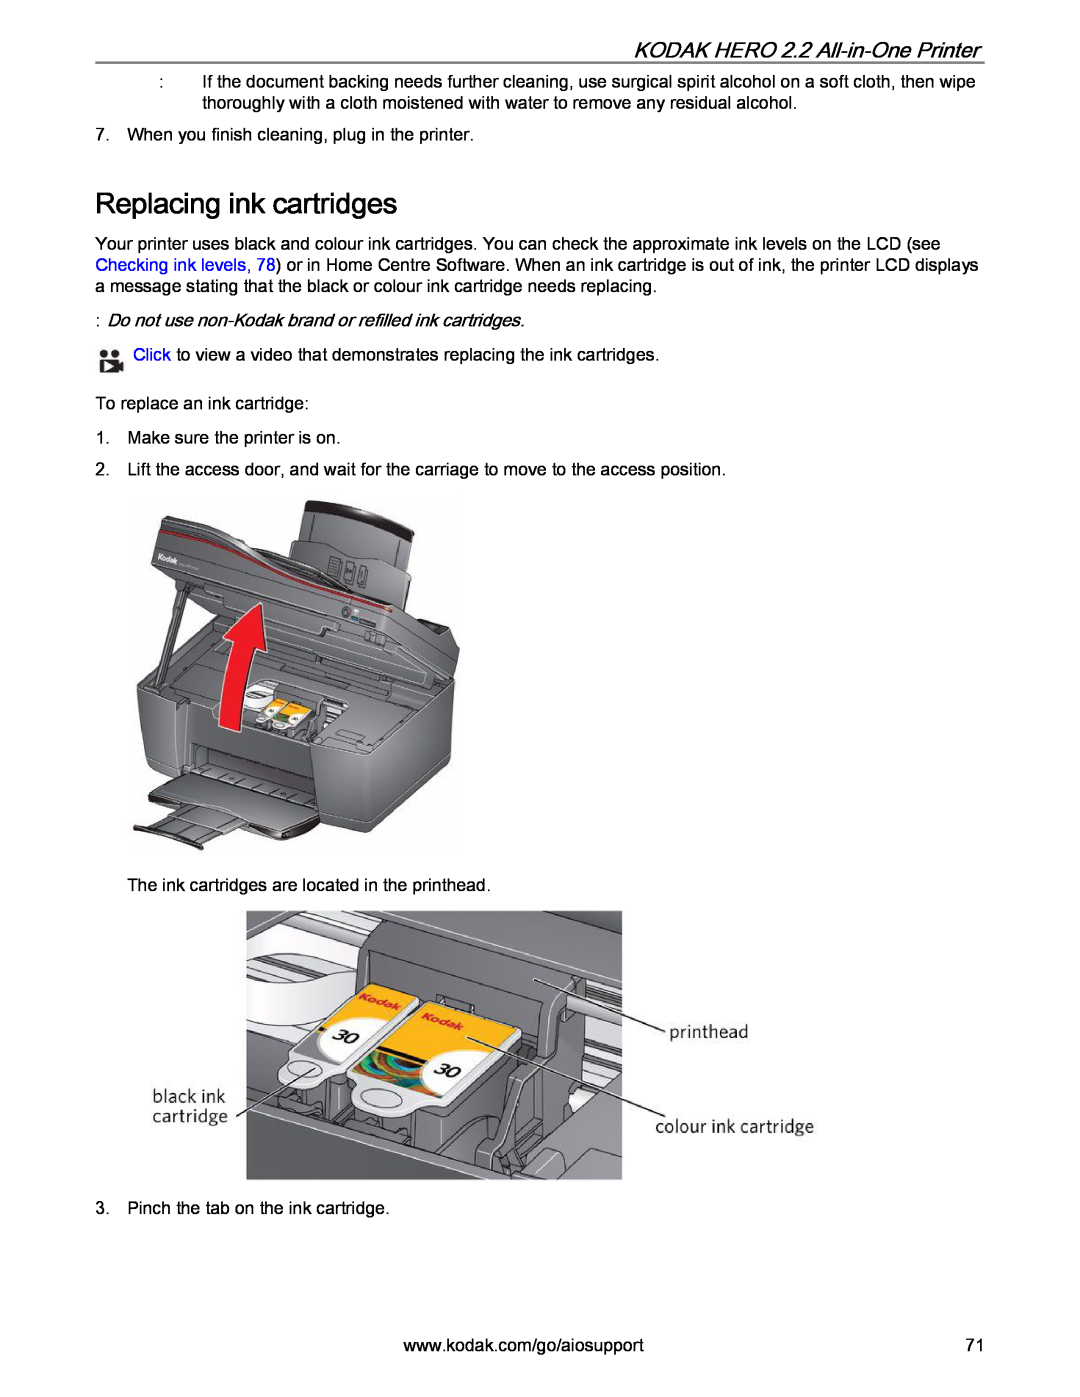 Kodak 2.2 manual Replacing ink cartridges, Do not use non-Kodak brand or refilled ink cartridges 